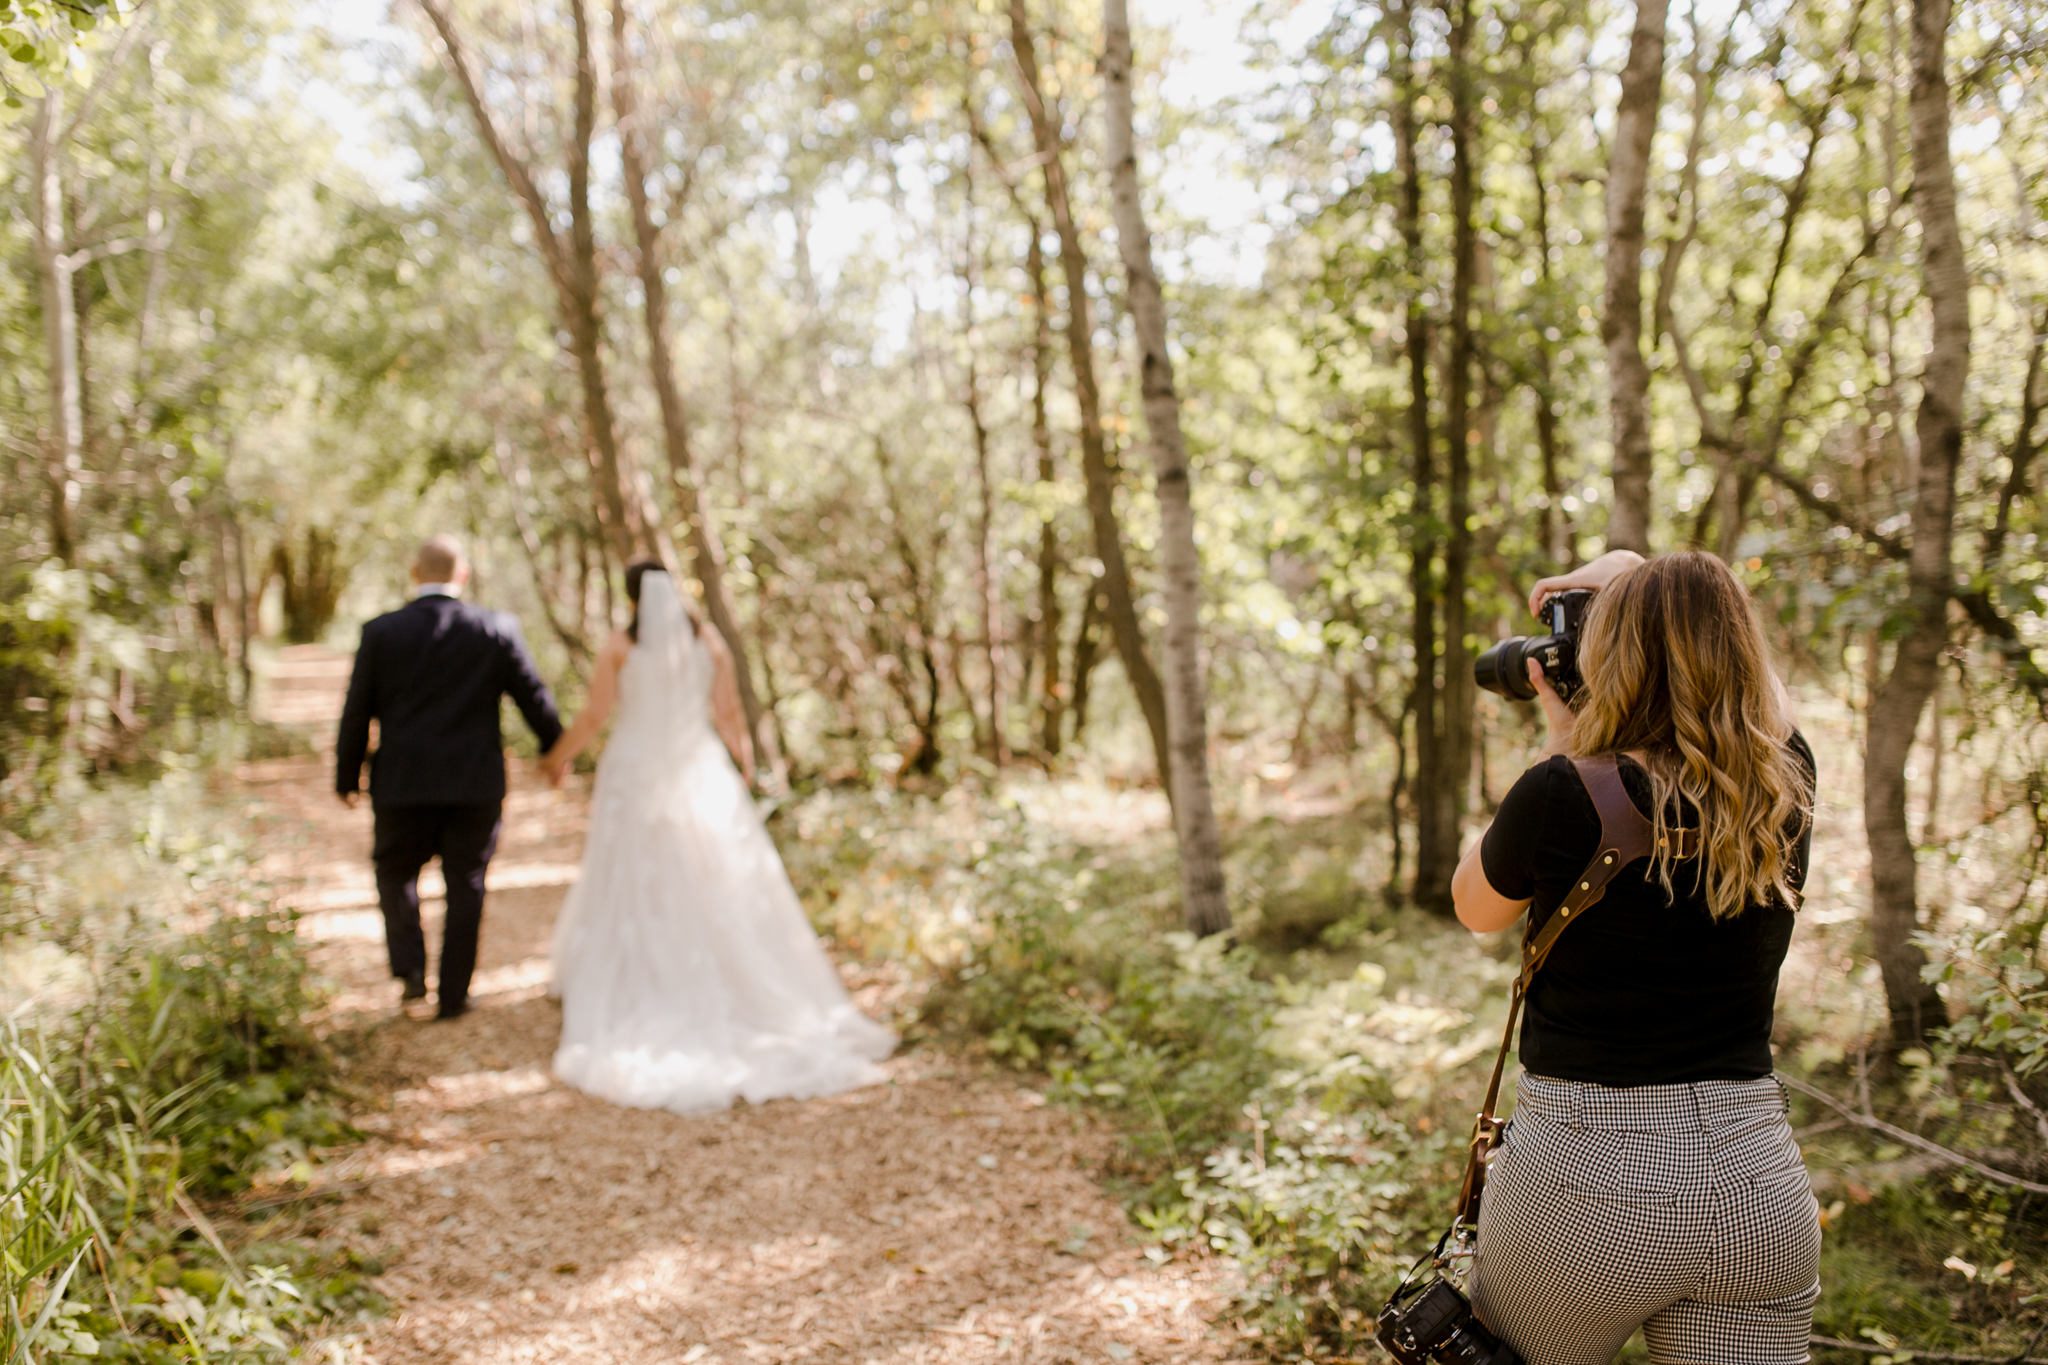 wedding photography gear, wedding photography educator, learn wedding photography from Vanessa Renae Photography, a Winnipeg and Calgary wedding photographer available across Canada.